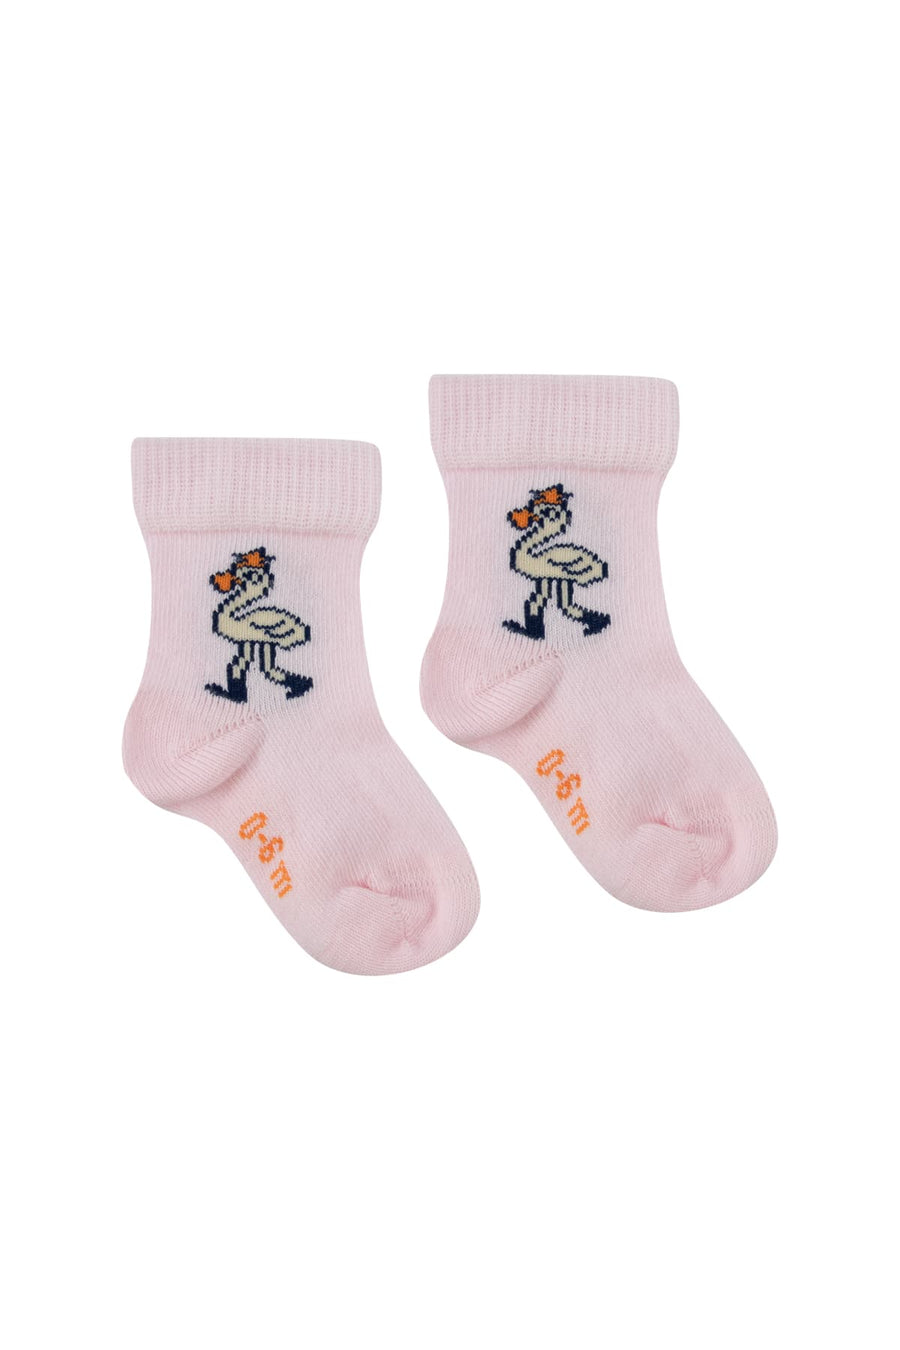 Flamingo Medium Baby Socks - Parkette.